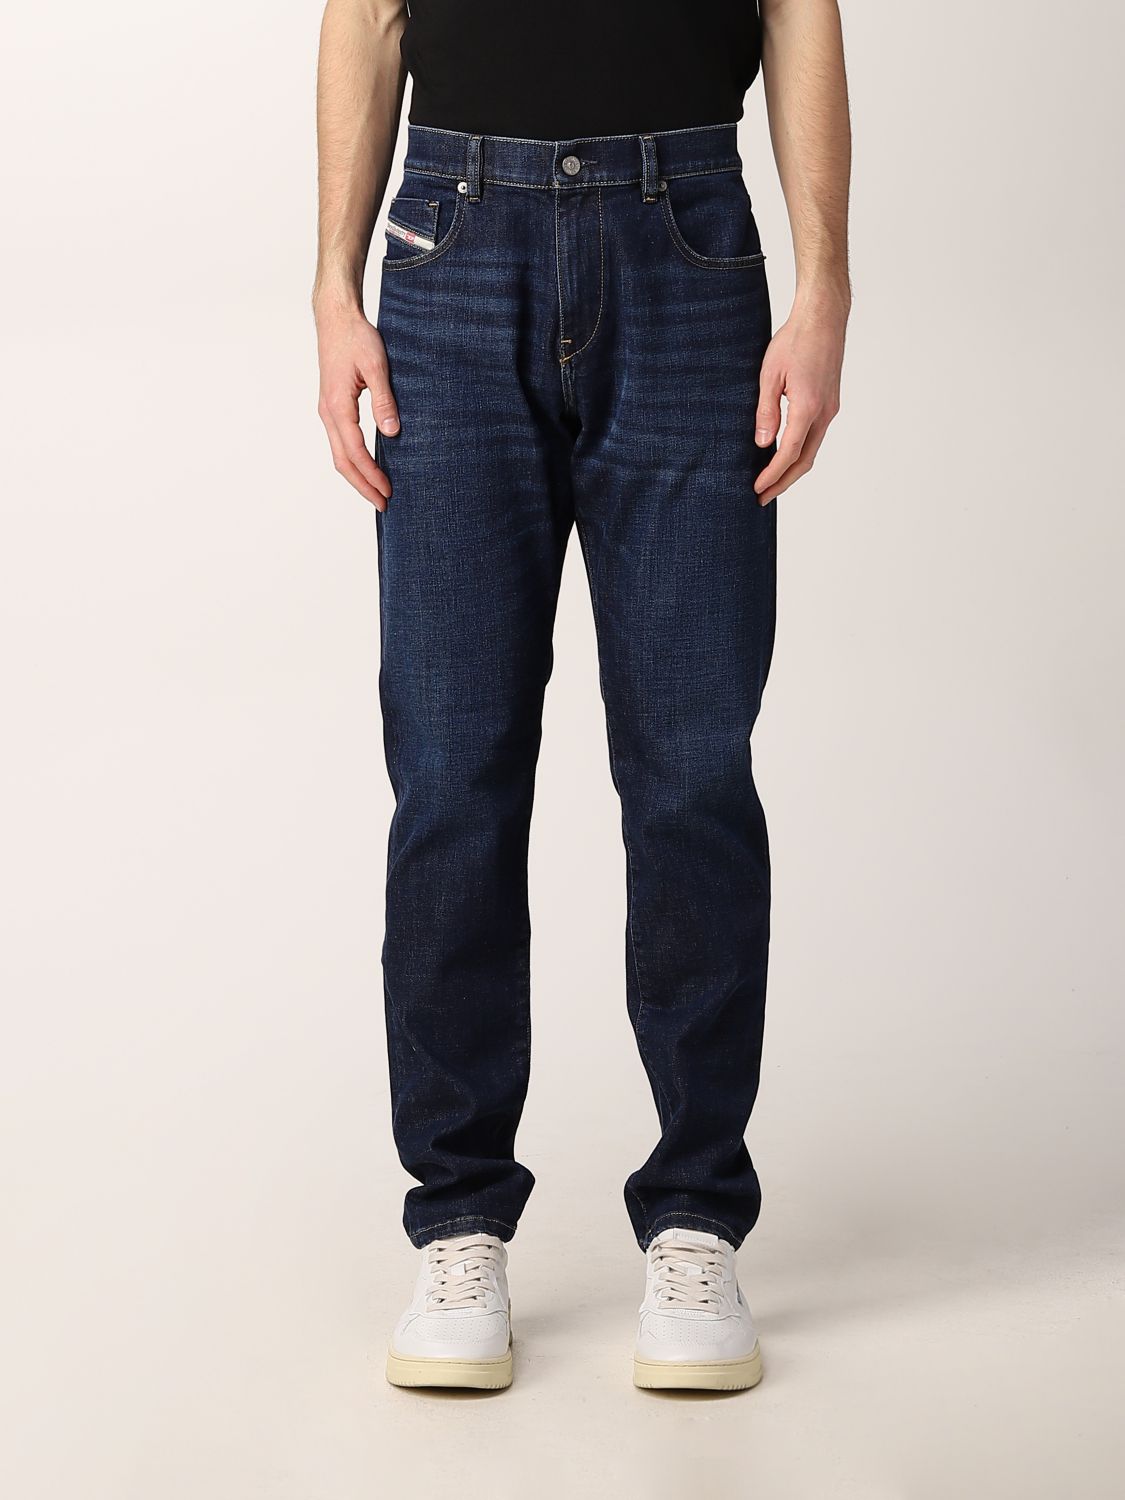 DIESEL: D-Strukt jeans in denim - Denim | Diesel jeans A0355809B90 on GIGLIO.COM